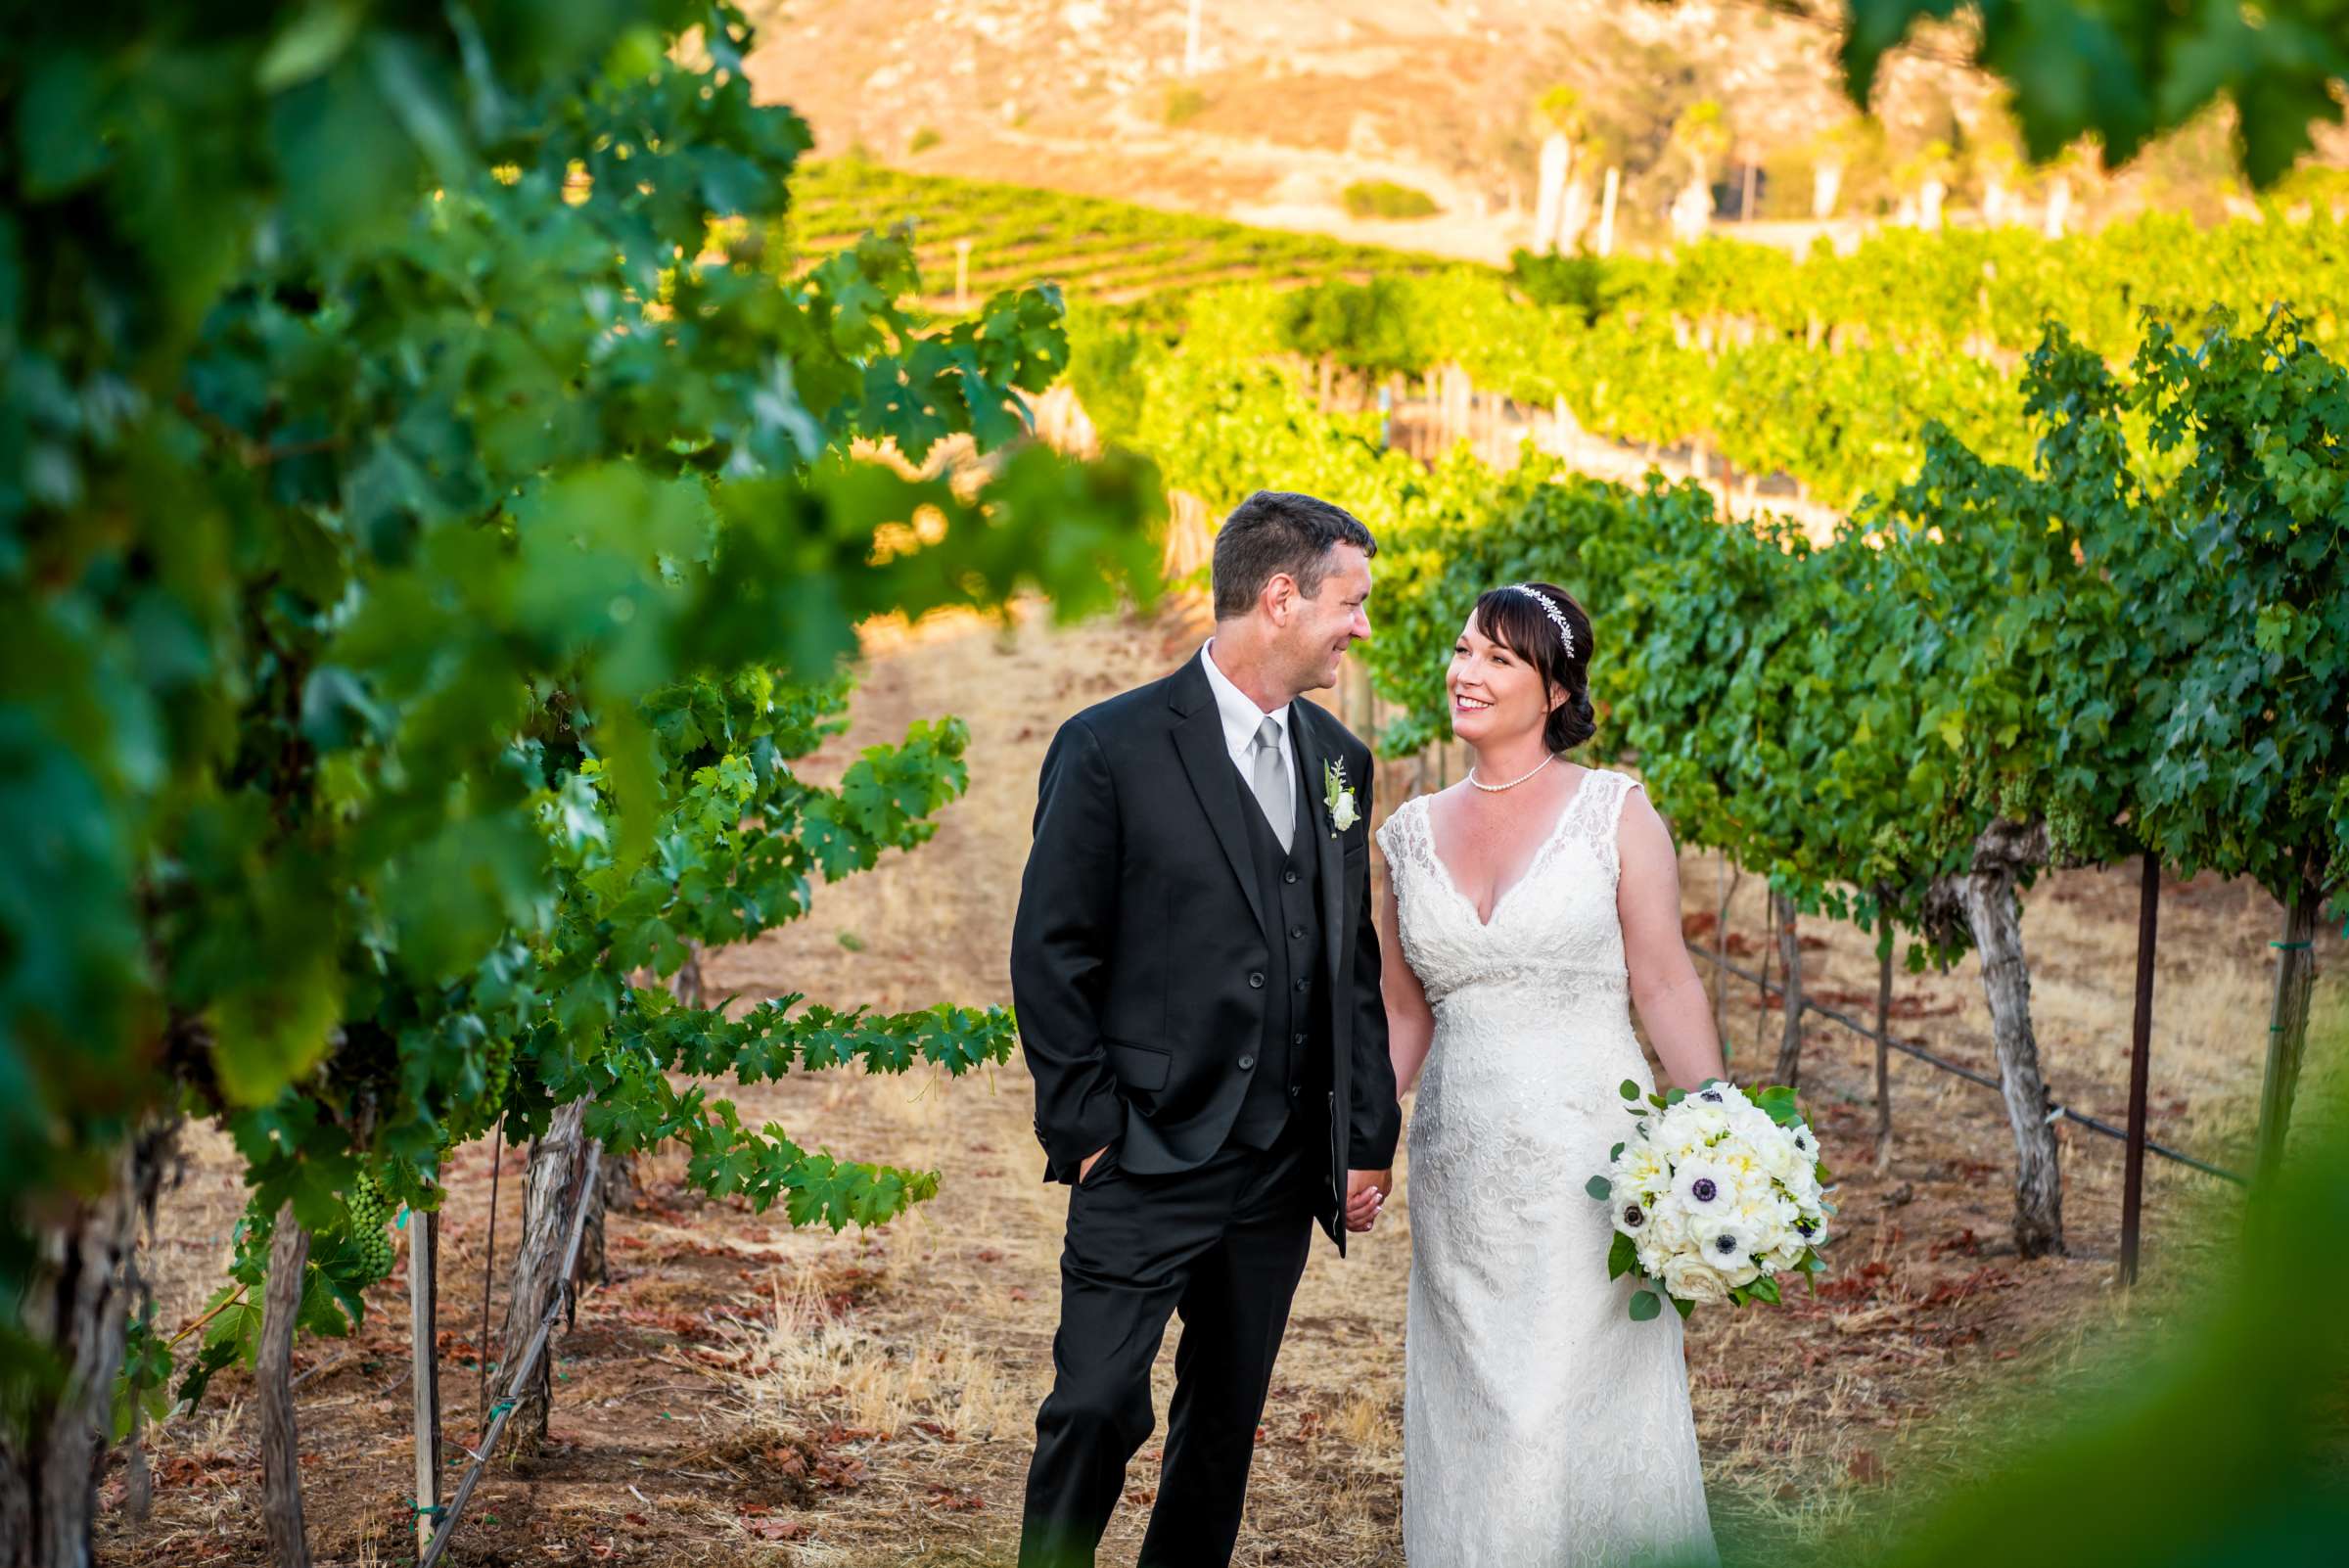 Cedric Mullins Married Wife Meghan Mullins At A Vineyard